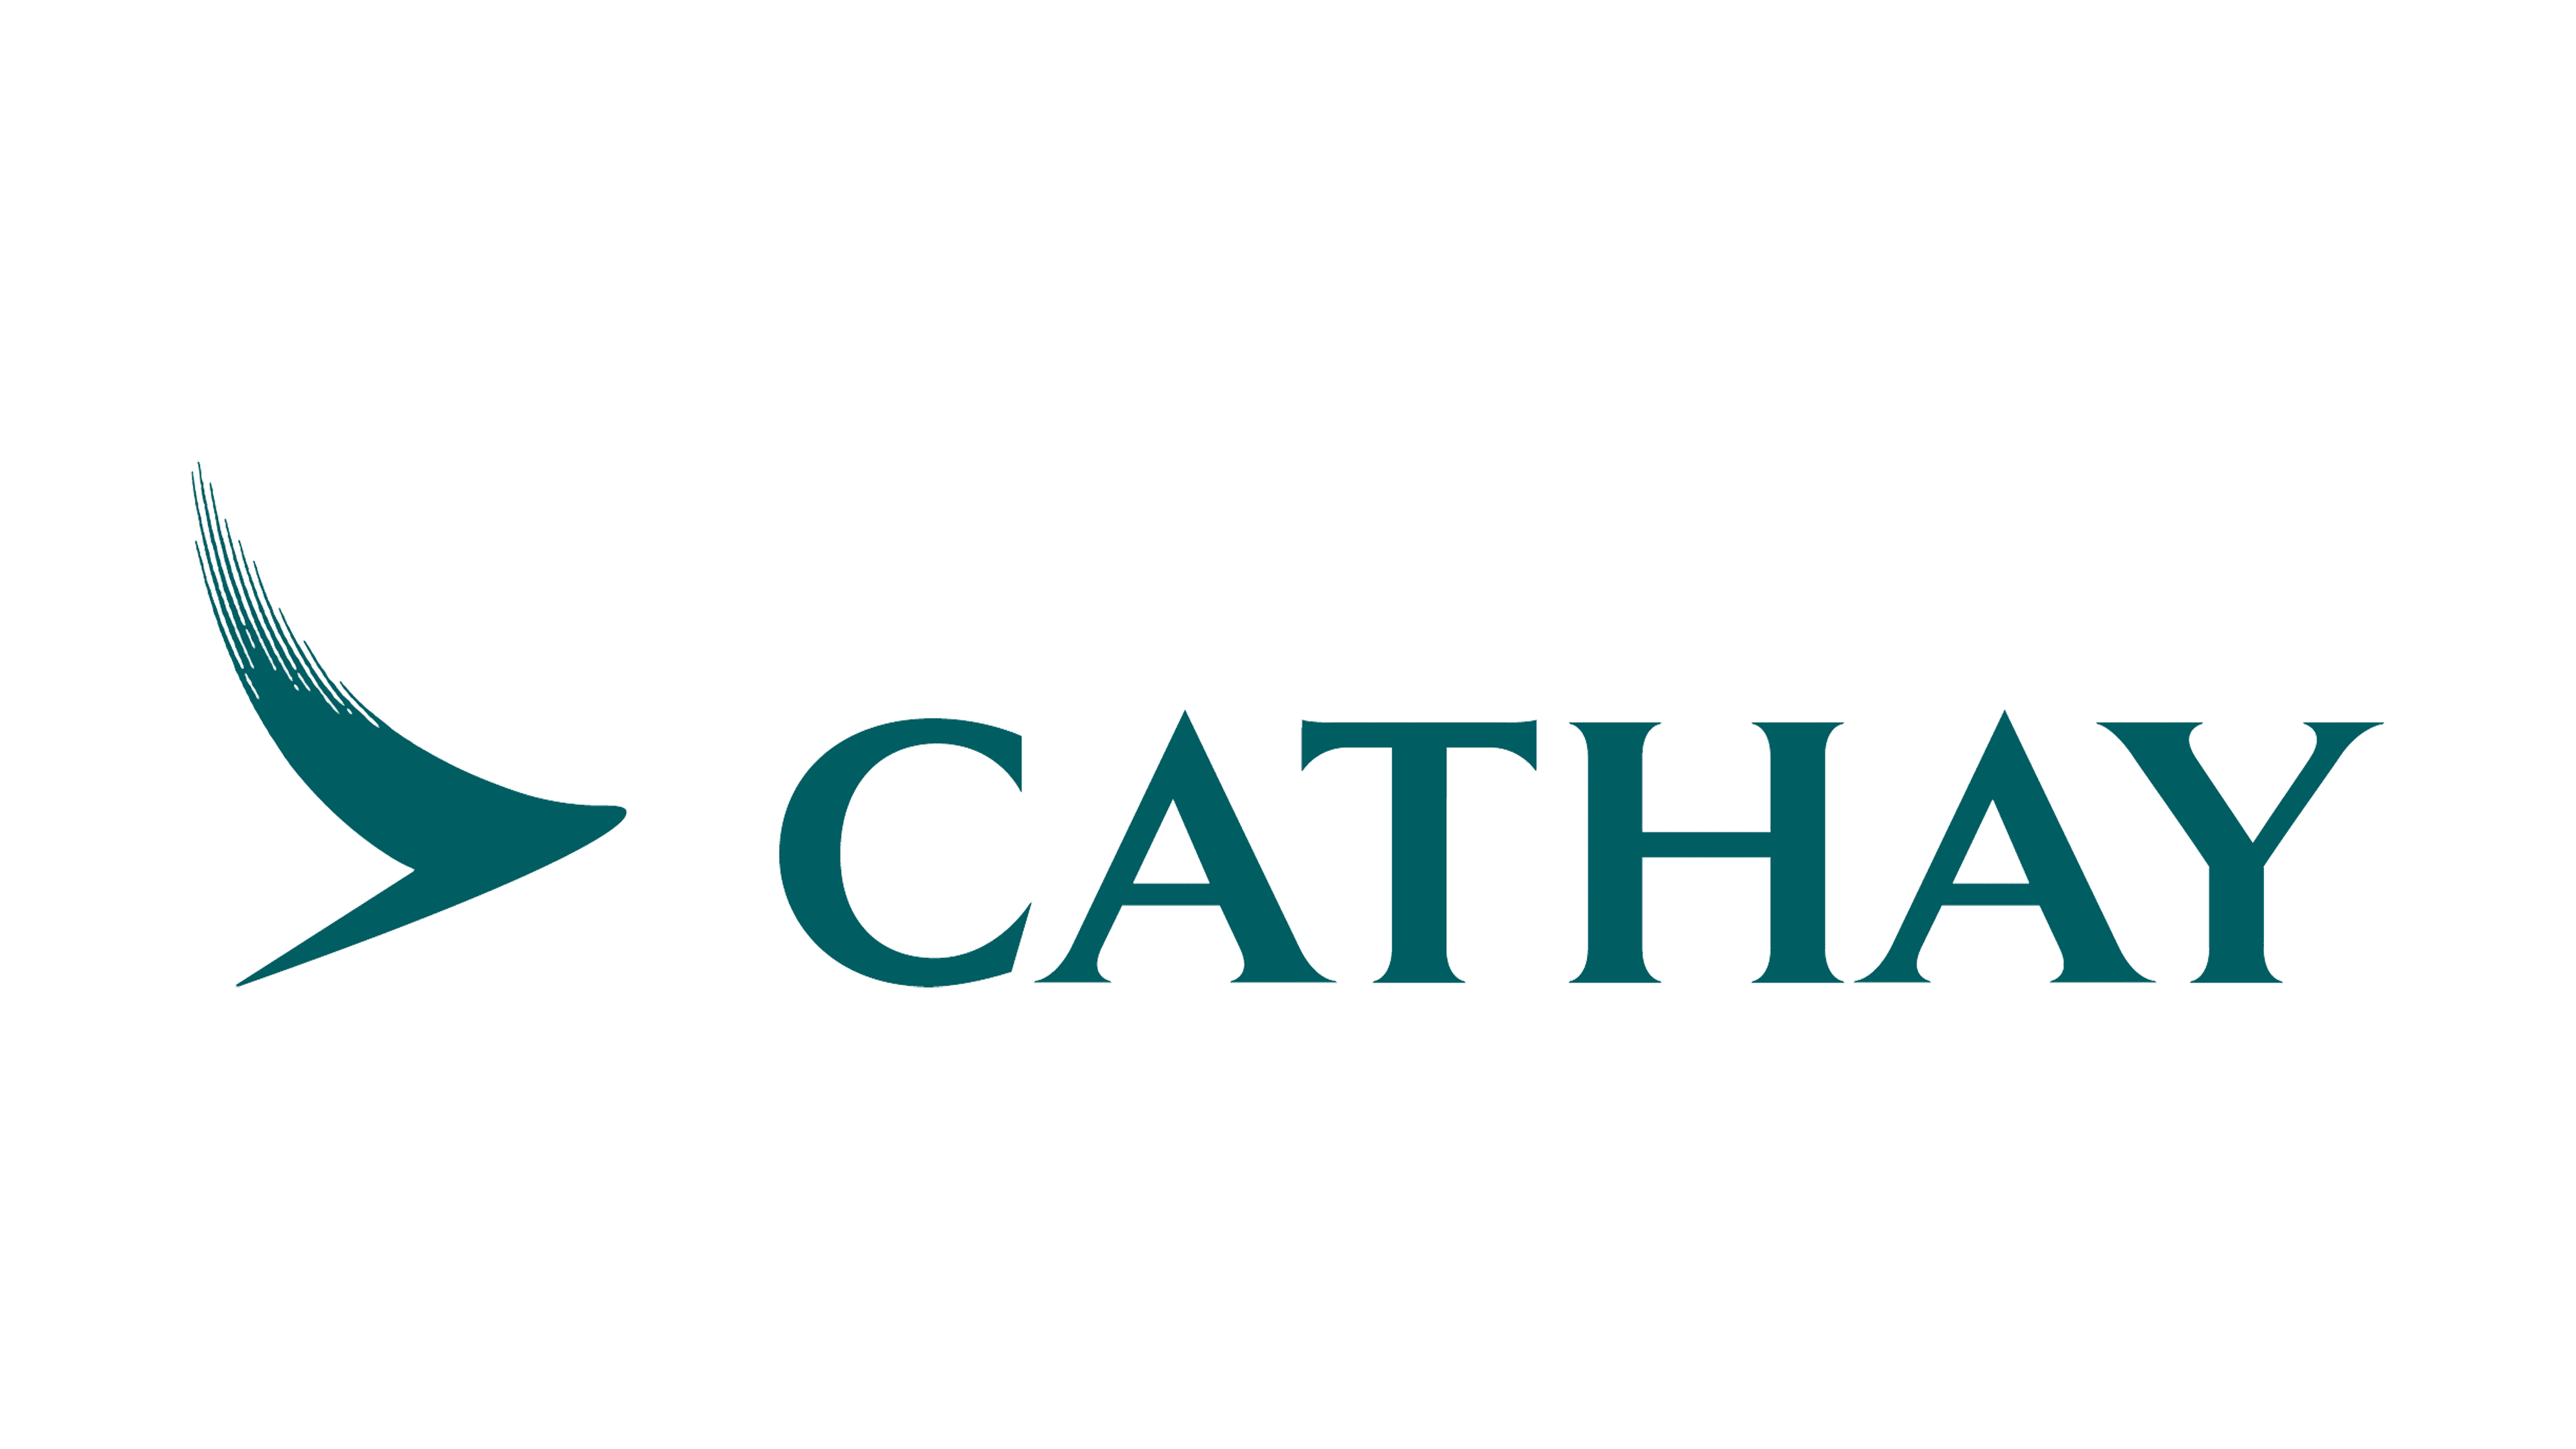 cathay pacific cargo logo